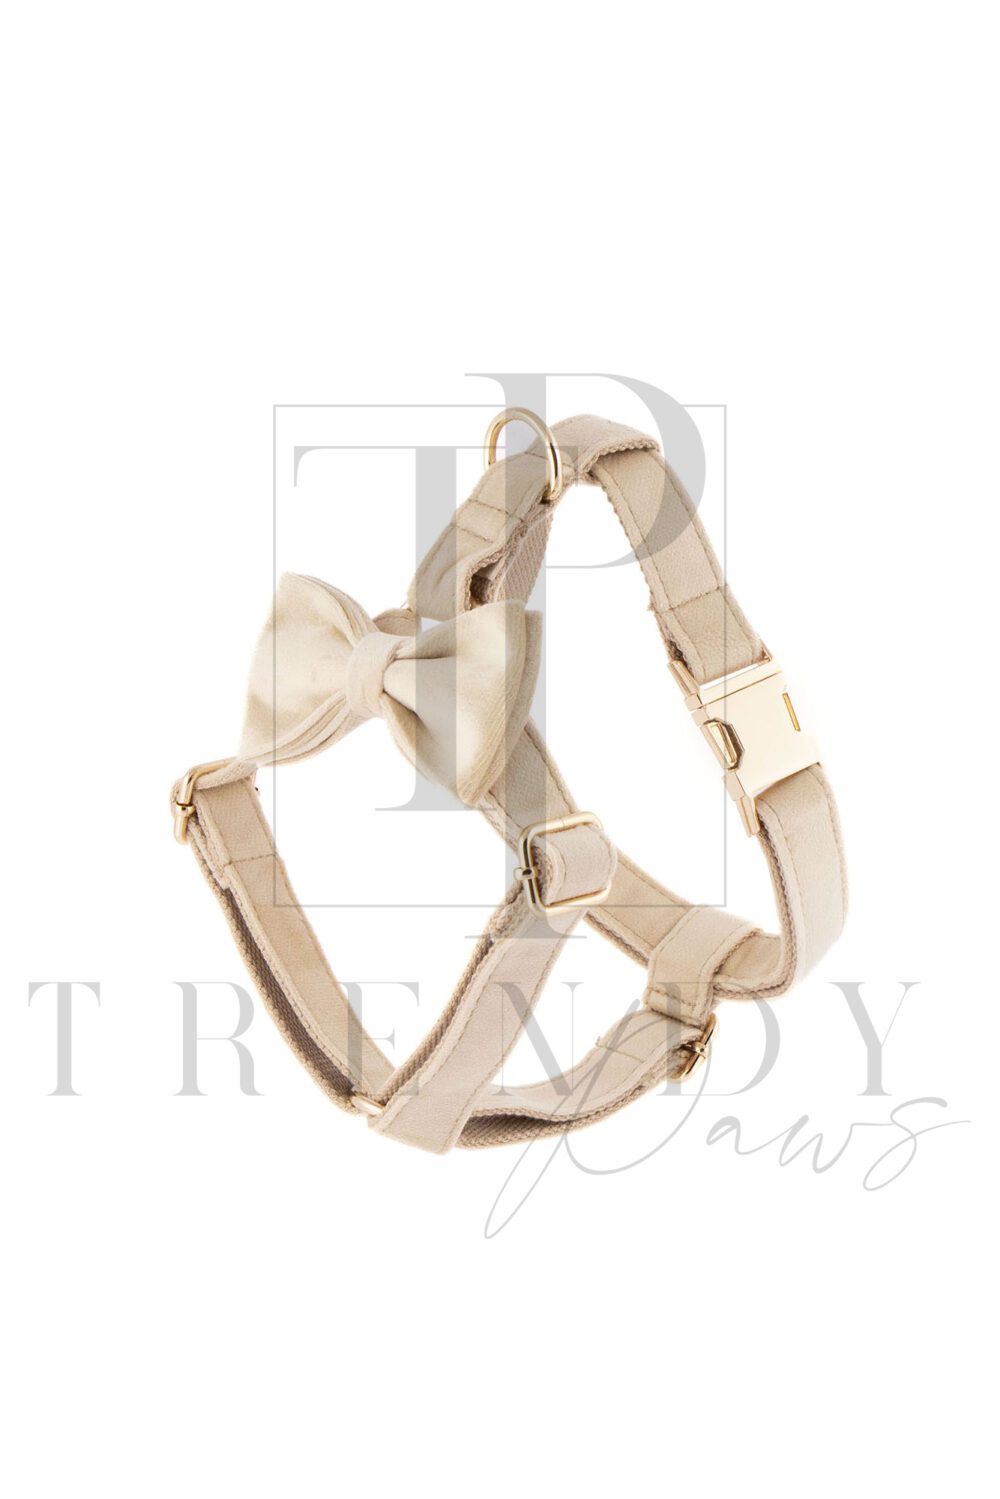 Cream velvet soft dog harnesses harness bow ties